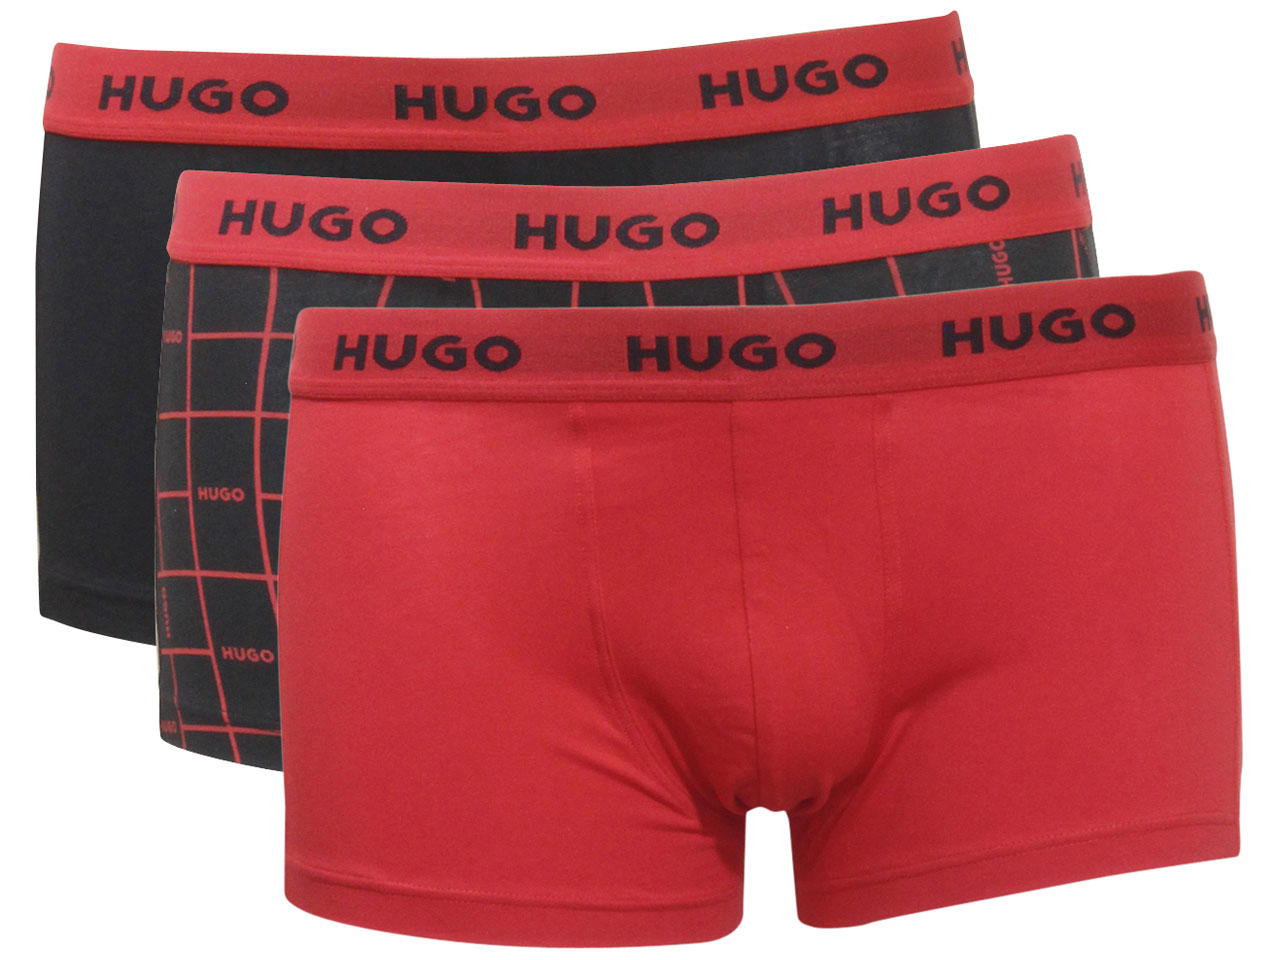 HUGO Triplet Brief Stripe - Briefs 